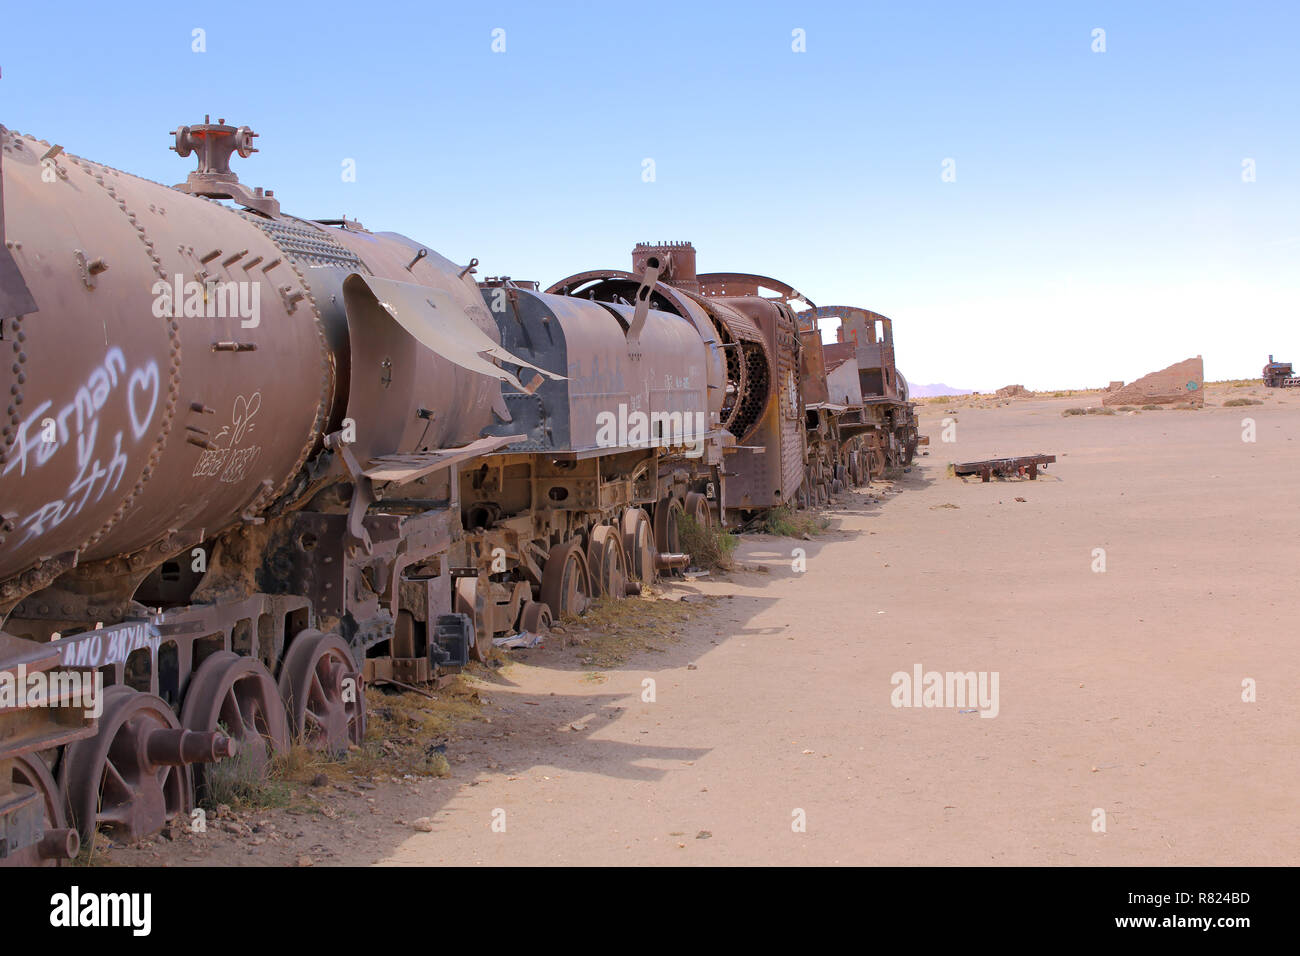 Train Cemetery, in Uyuni, Bolivia near the salt flats. Rusty old steam train. Stock Photo